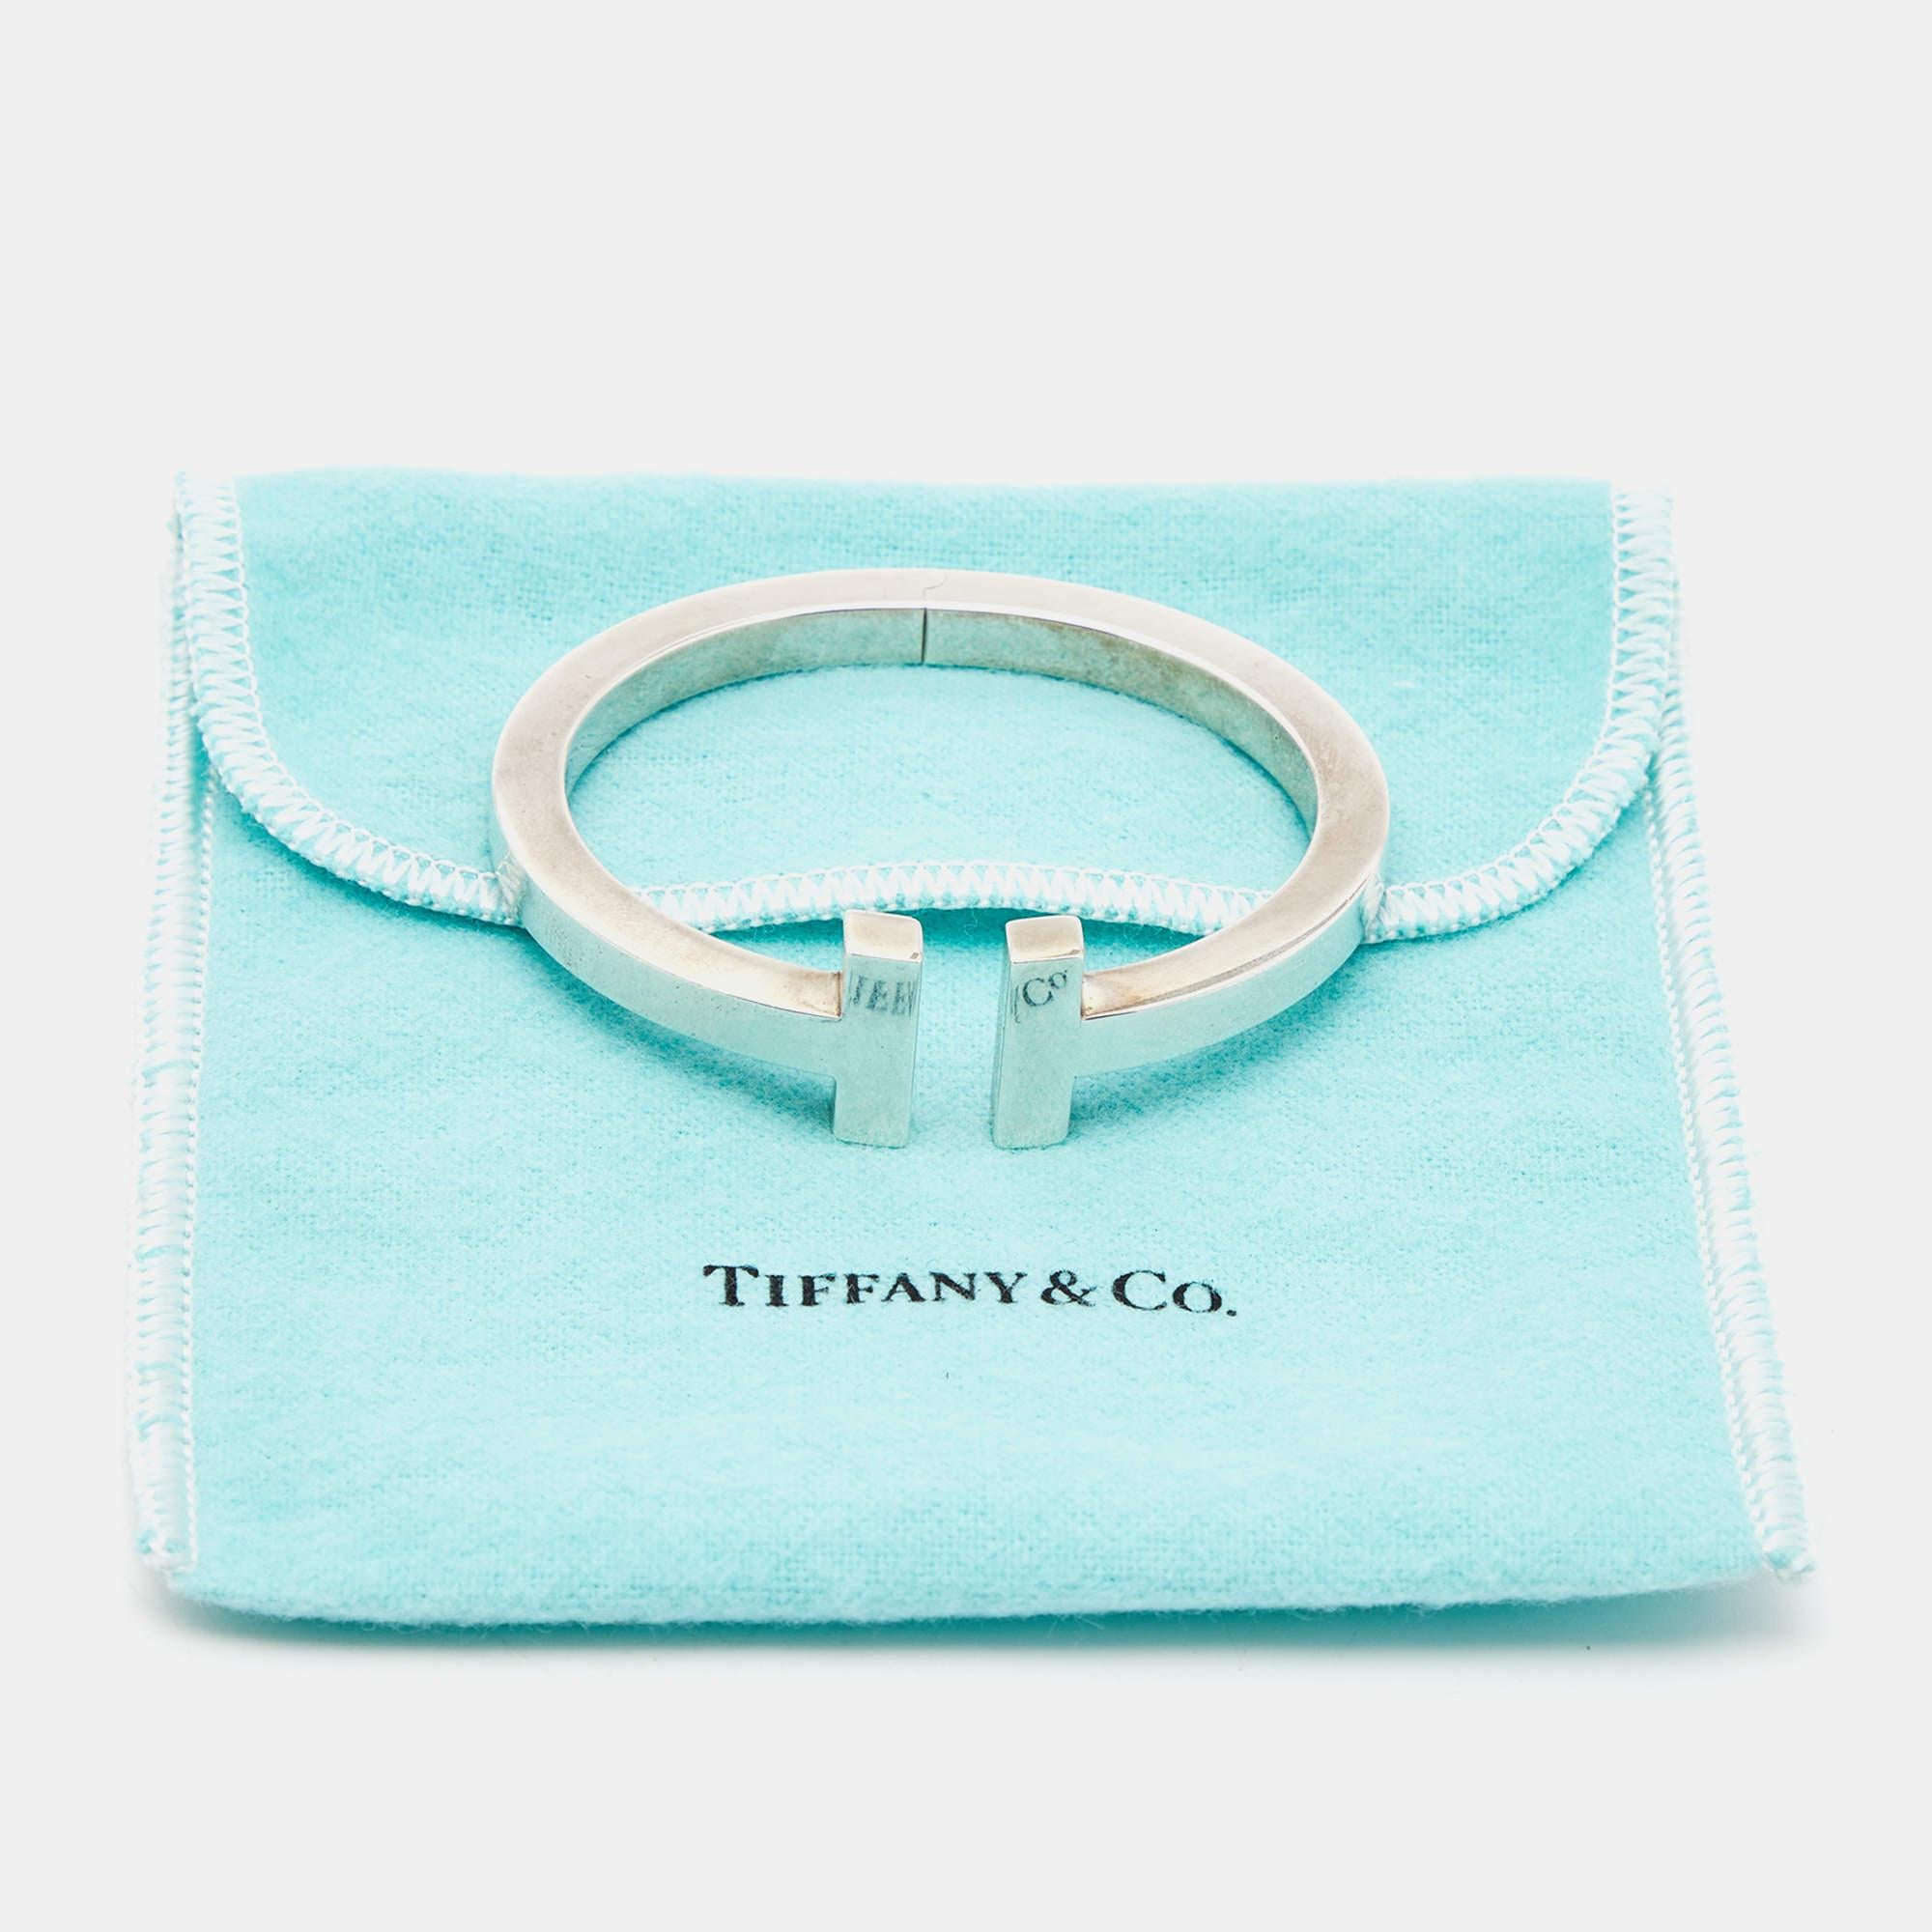 tiffany and co silver bracelet price